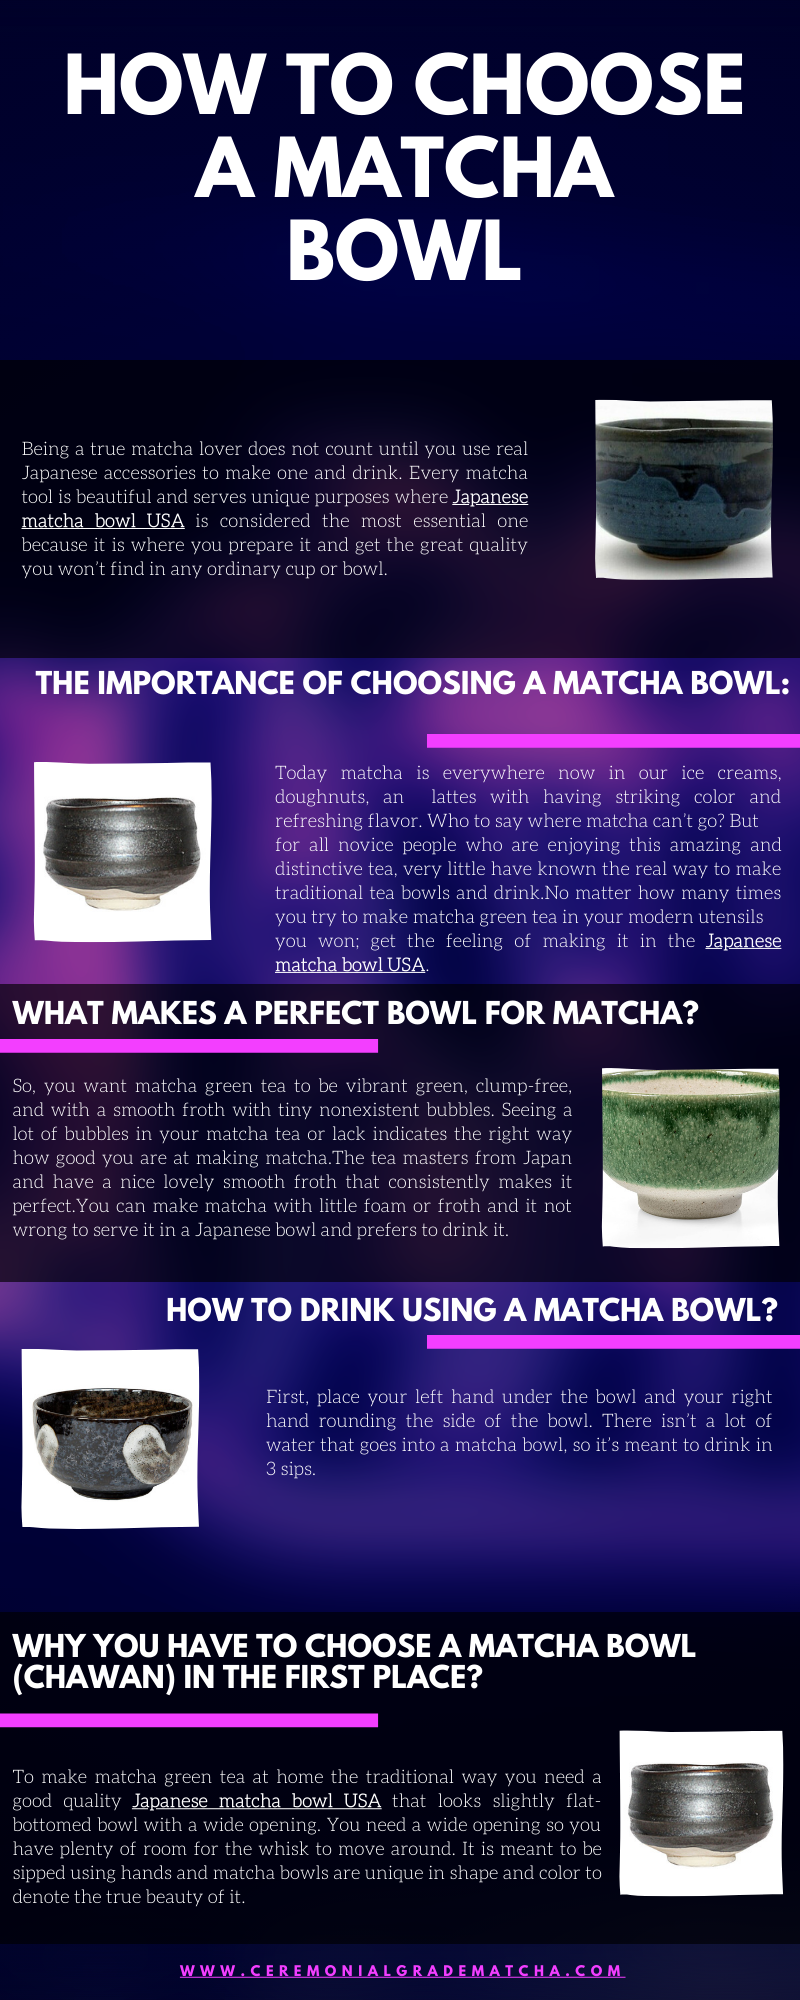 https://japanesematchabowl.weebly.com/uploads/1/3/1/4/131435671/how-to-choose-a-matcha-bowl_orig.png